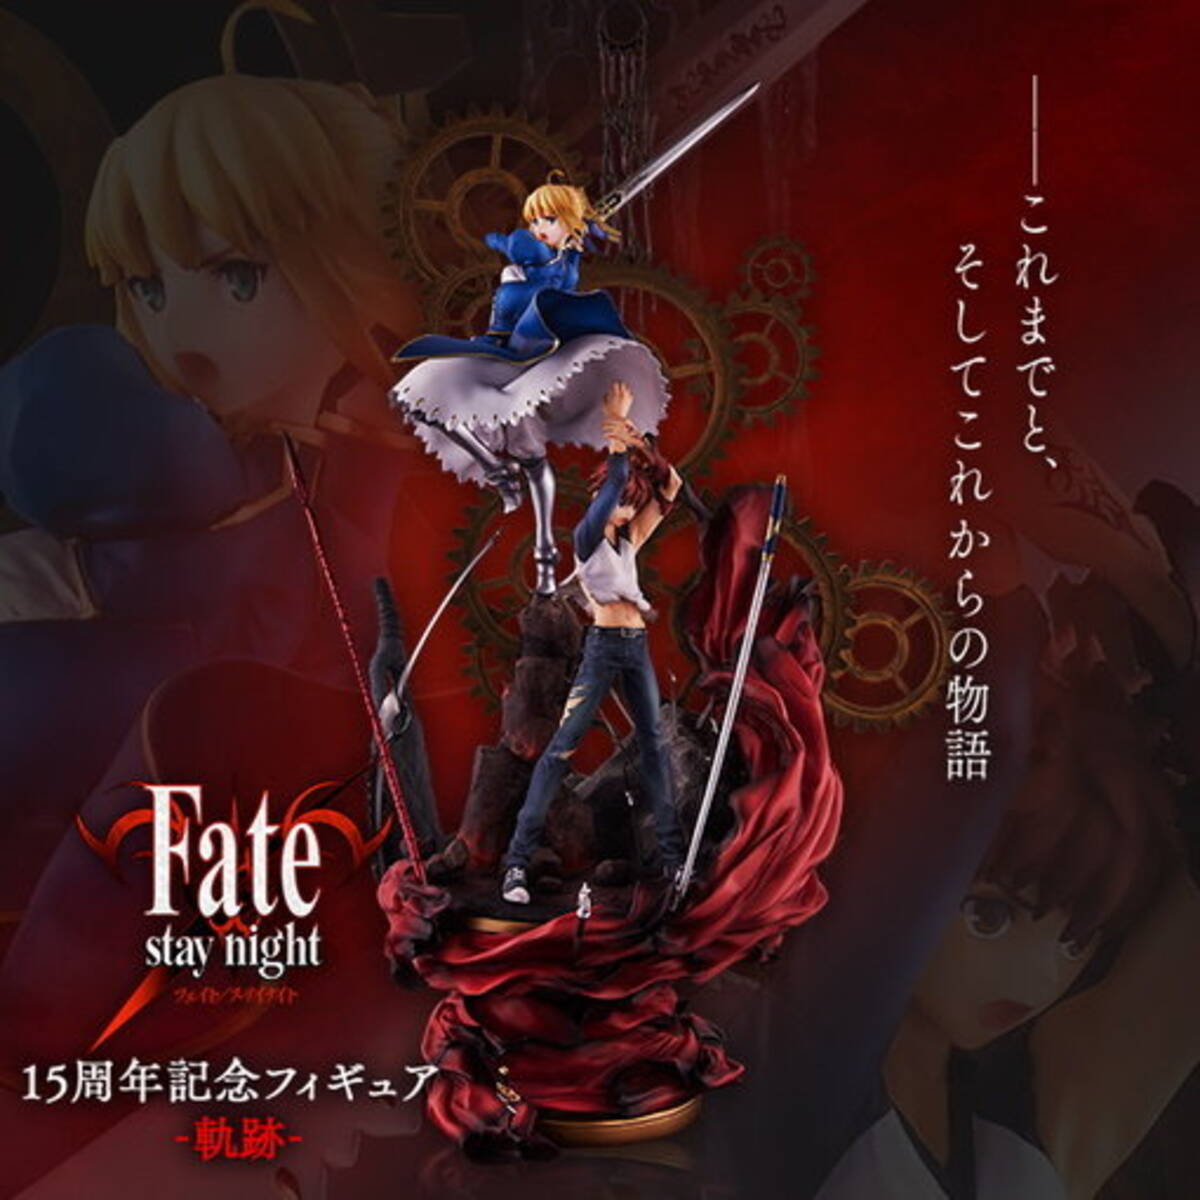 Fate Stay Night 15周年記念フィギュア 軌跡 公開 士郎 セイバーによる Fate シリーズを象徴する アニバーサリー作品 19年12月日 エキサイトニュース